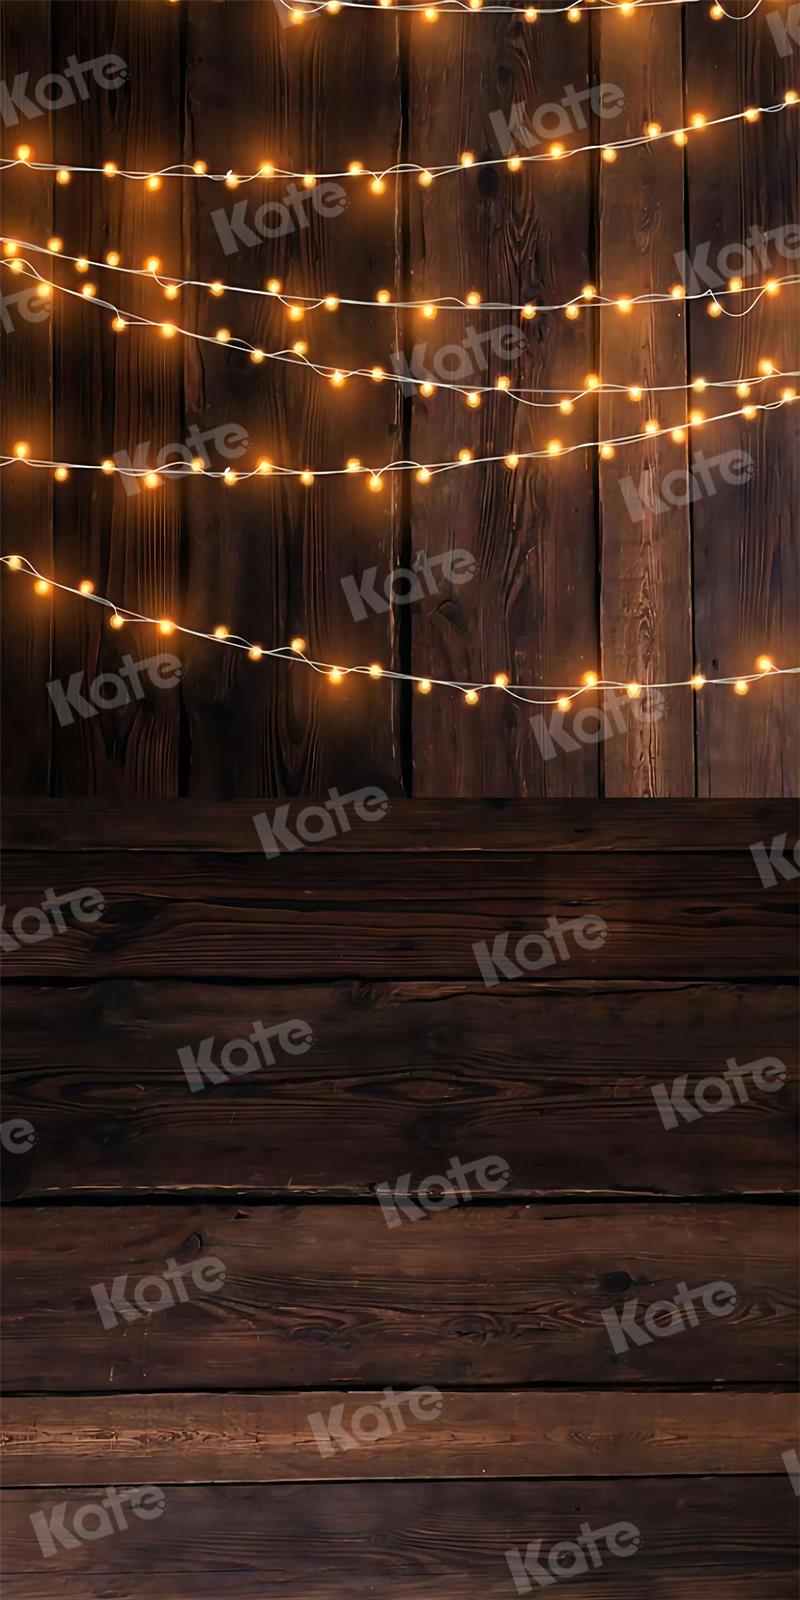 Kate Vintage Light Wood Backdrop for Photography